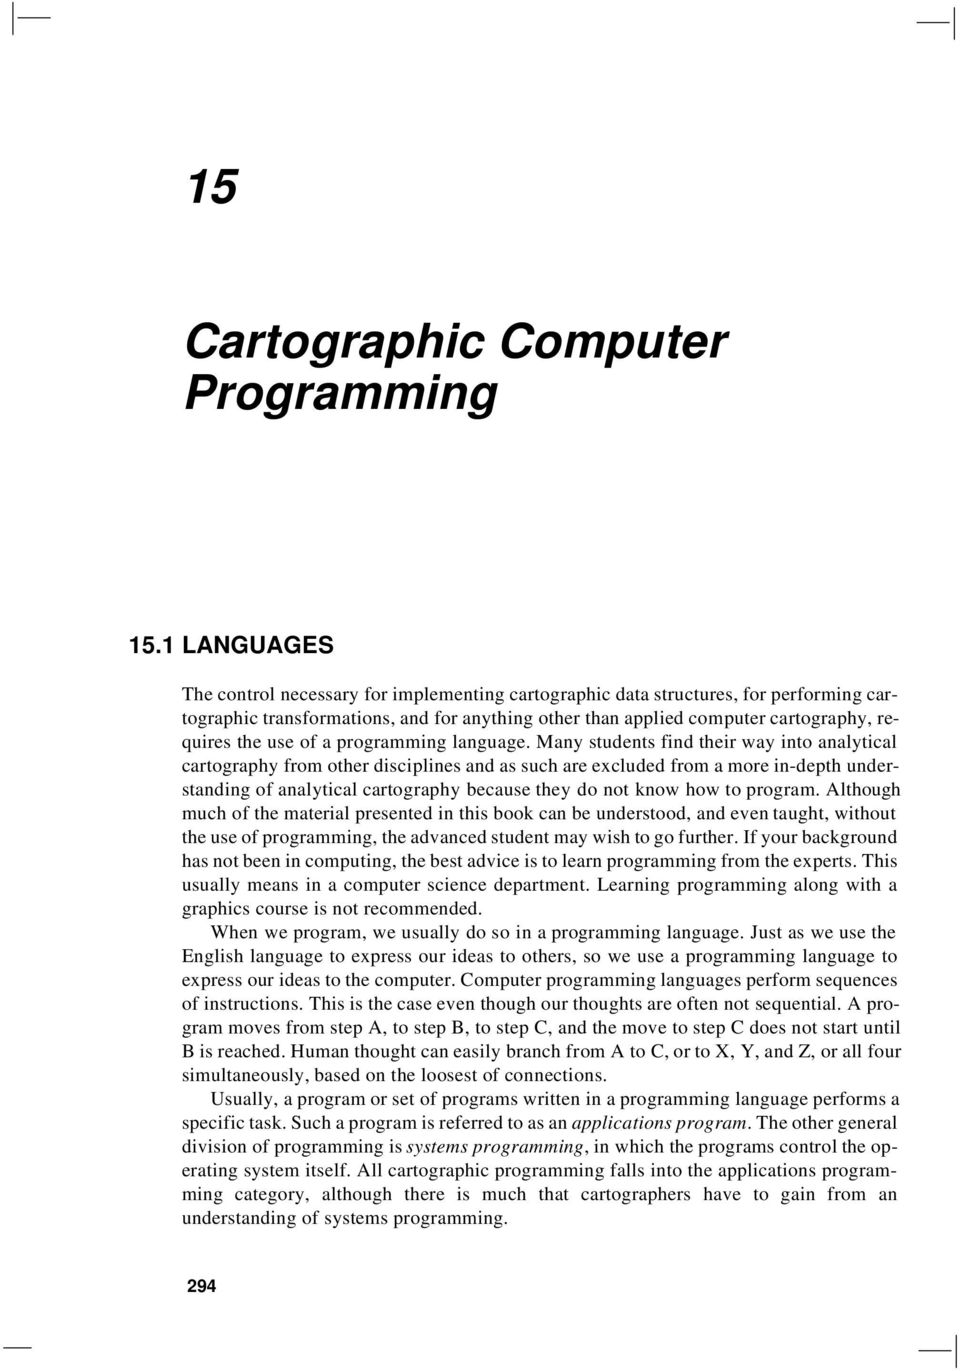 use of a programming language.